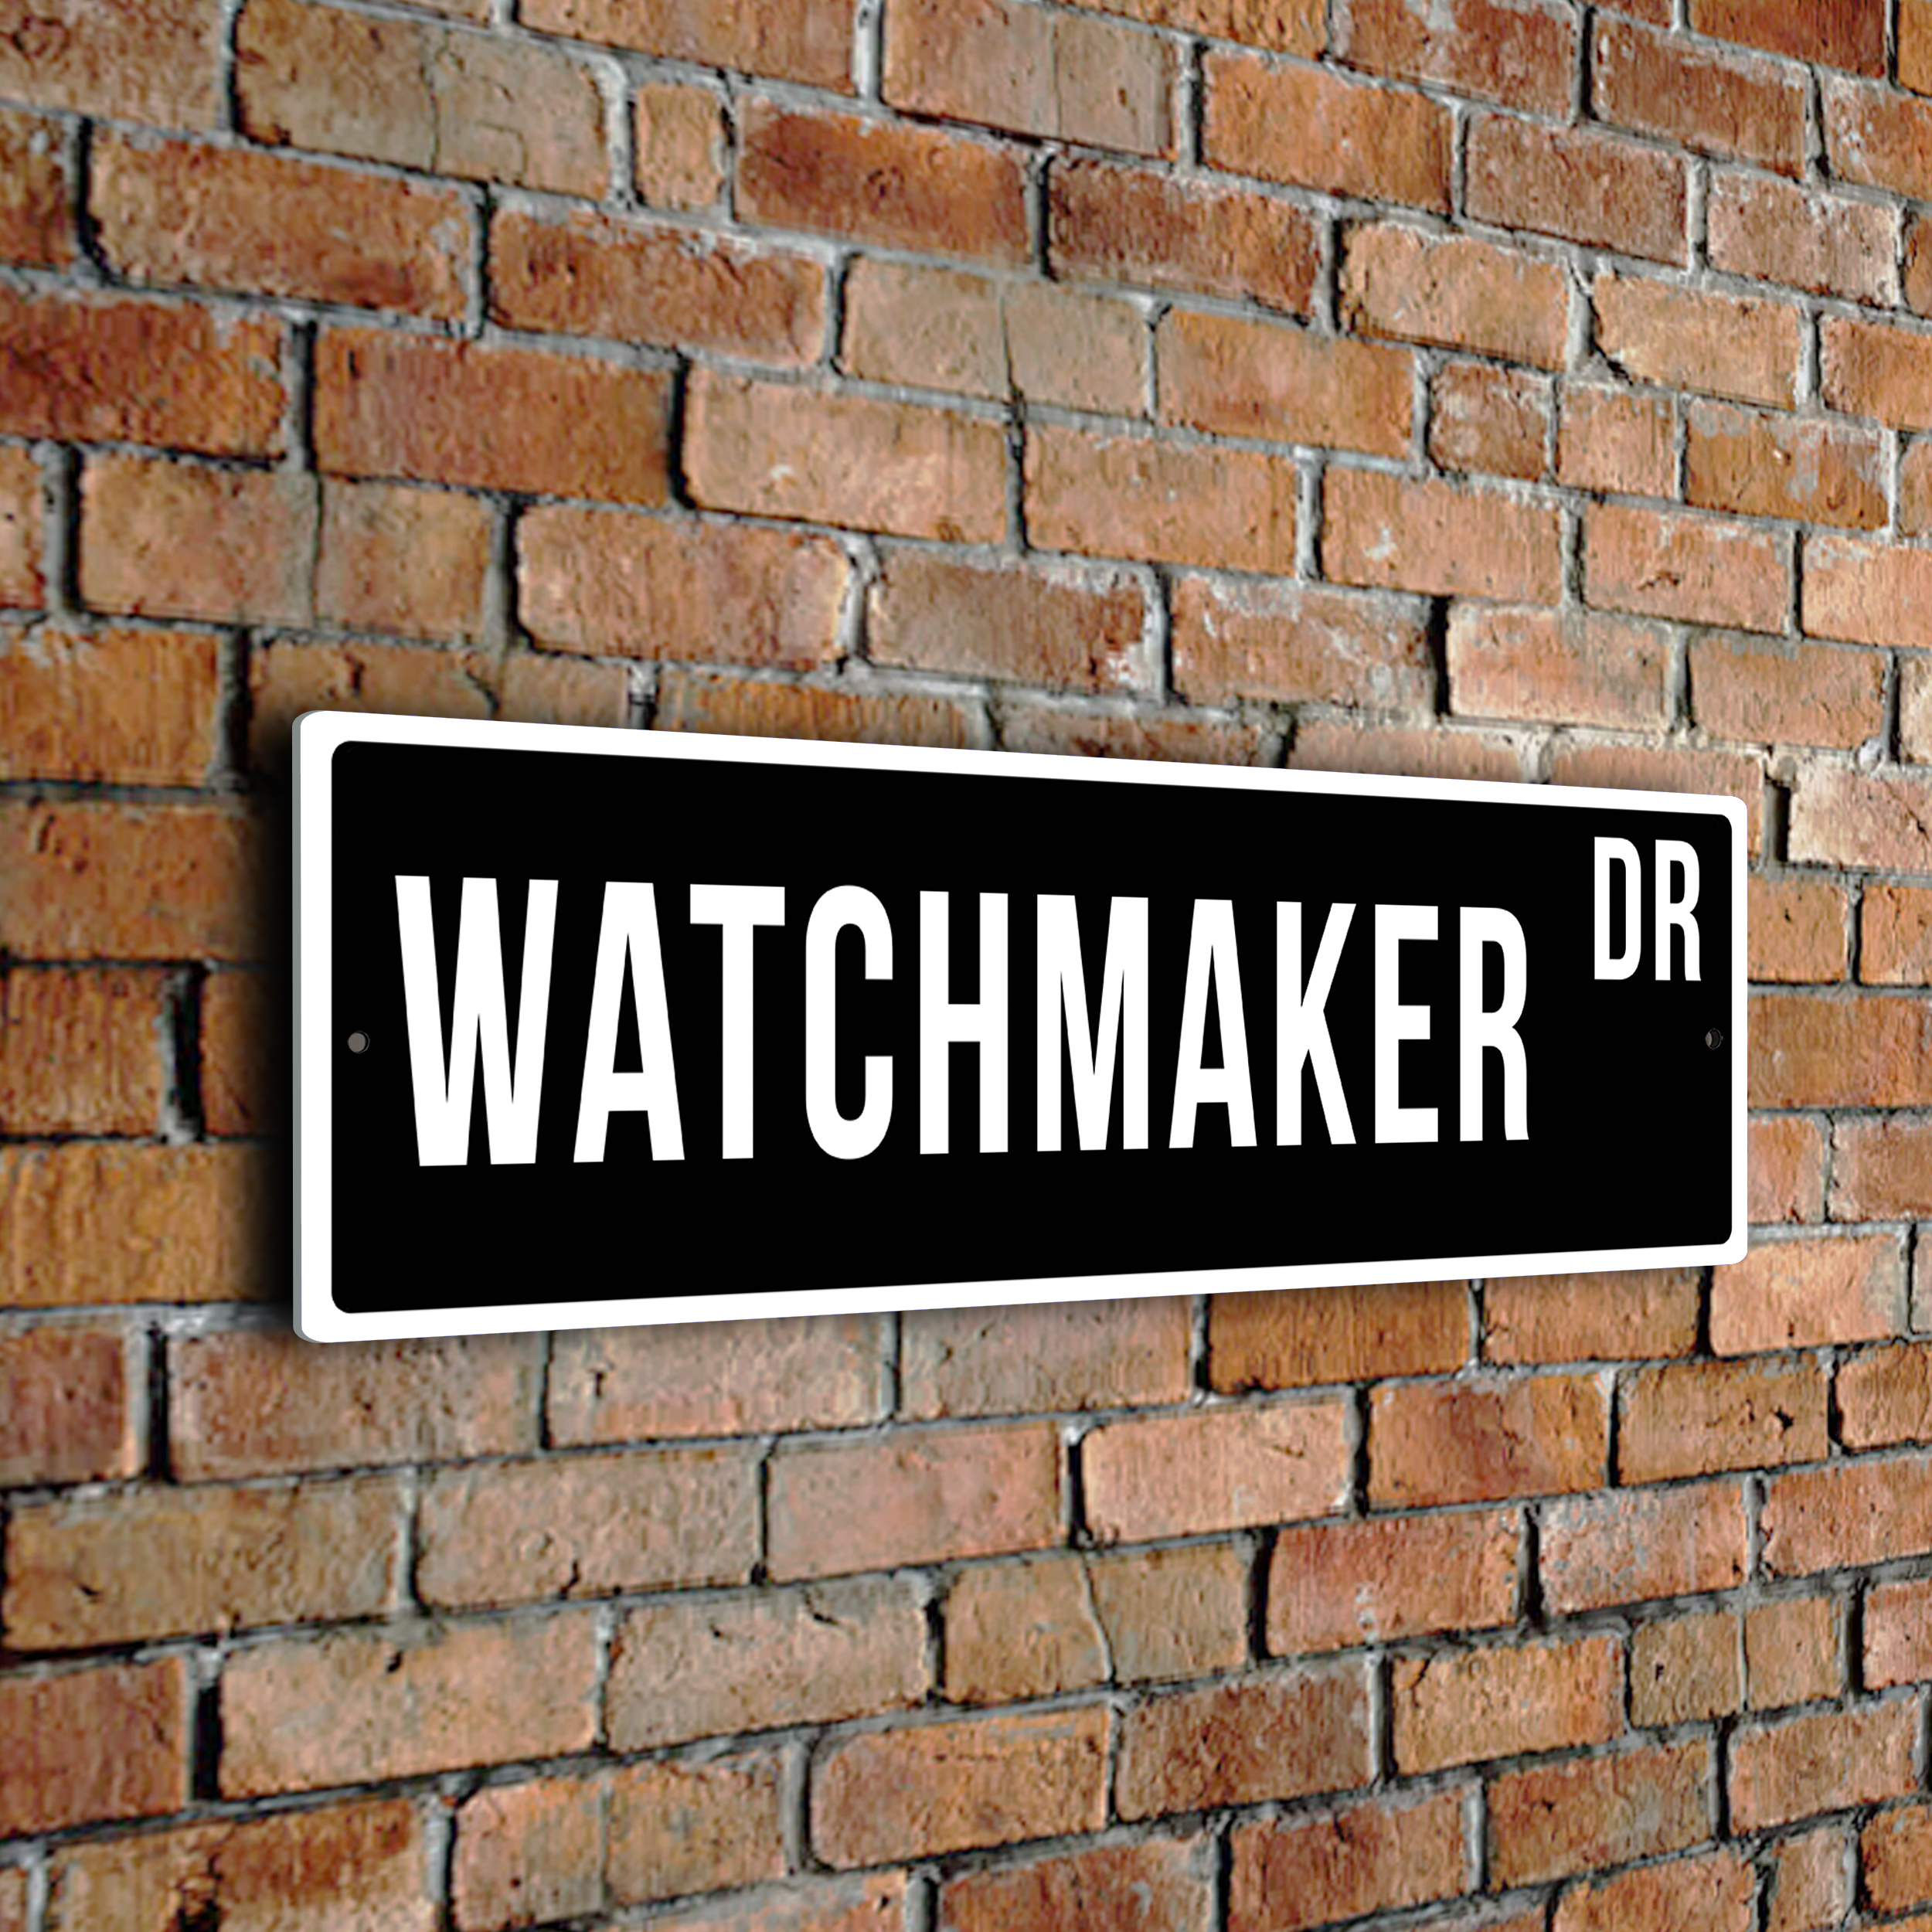 Watchmaker street sign